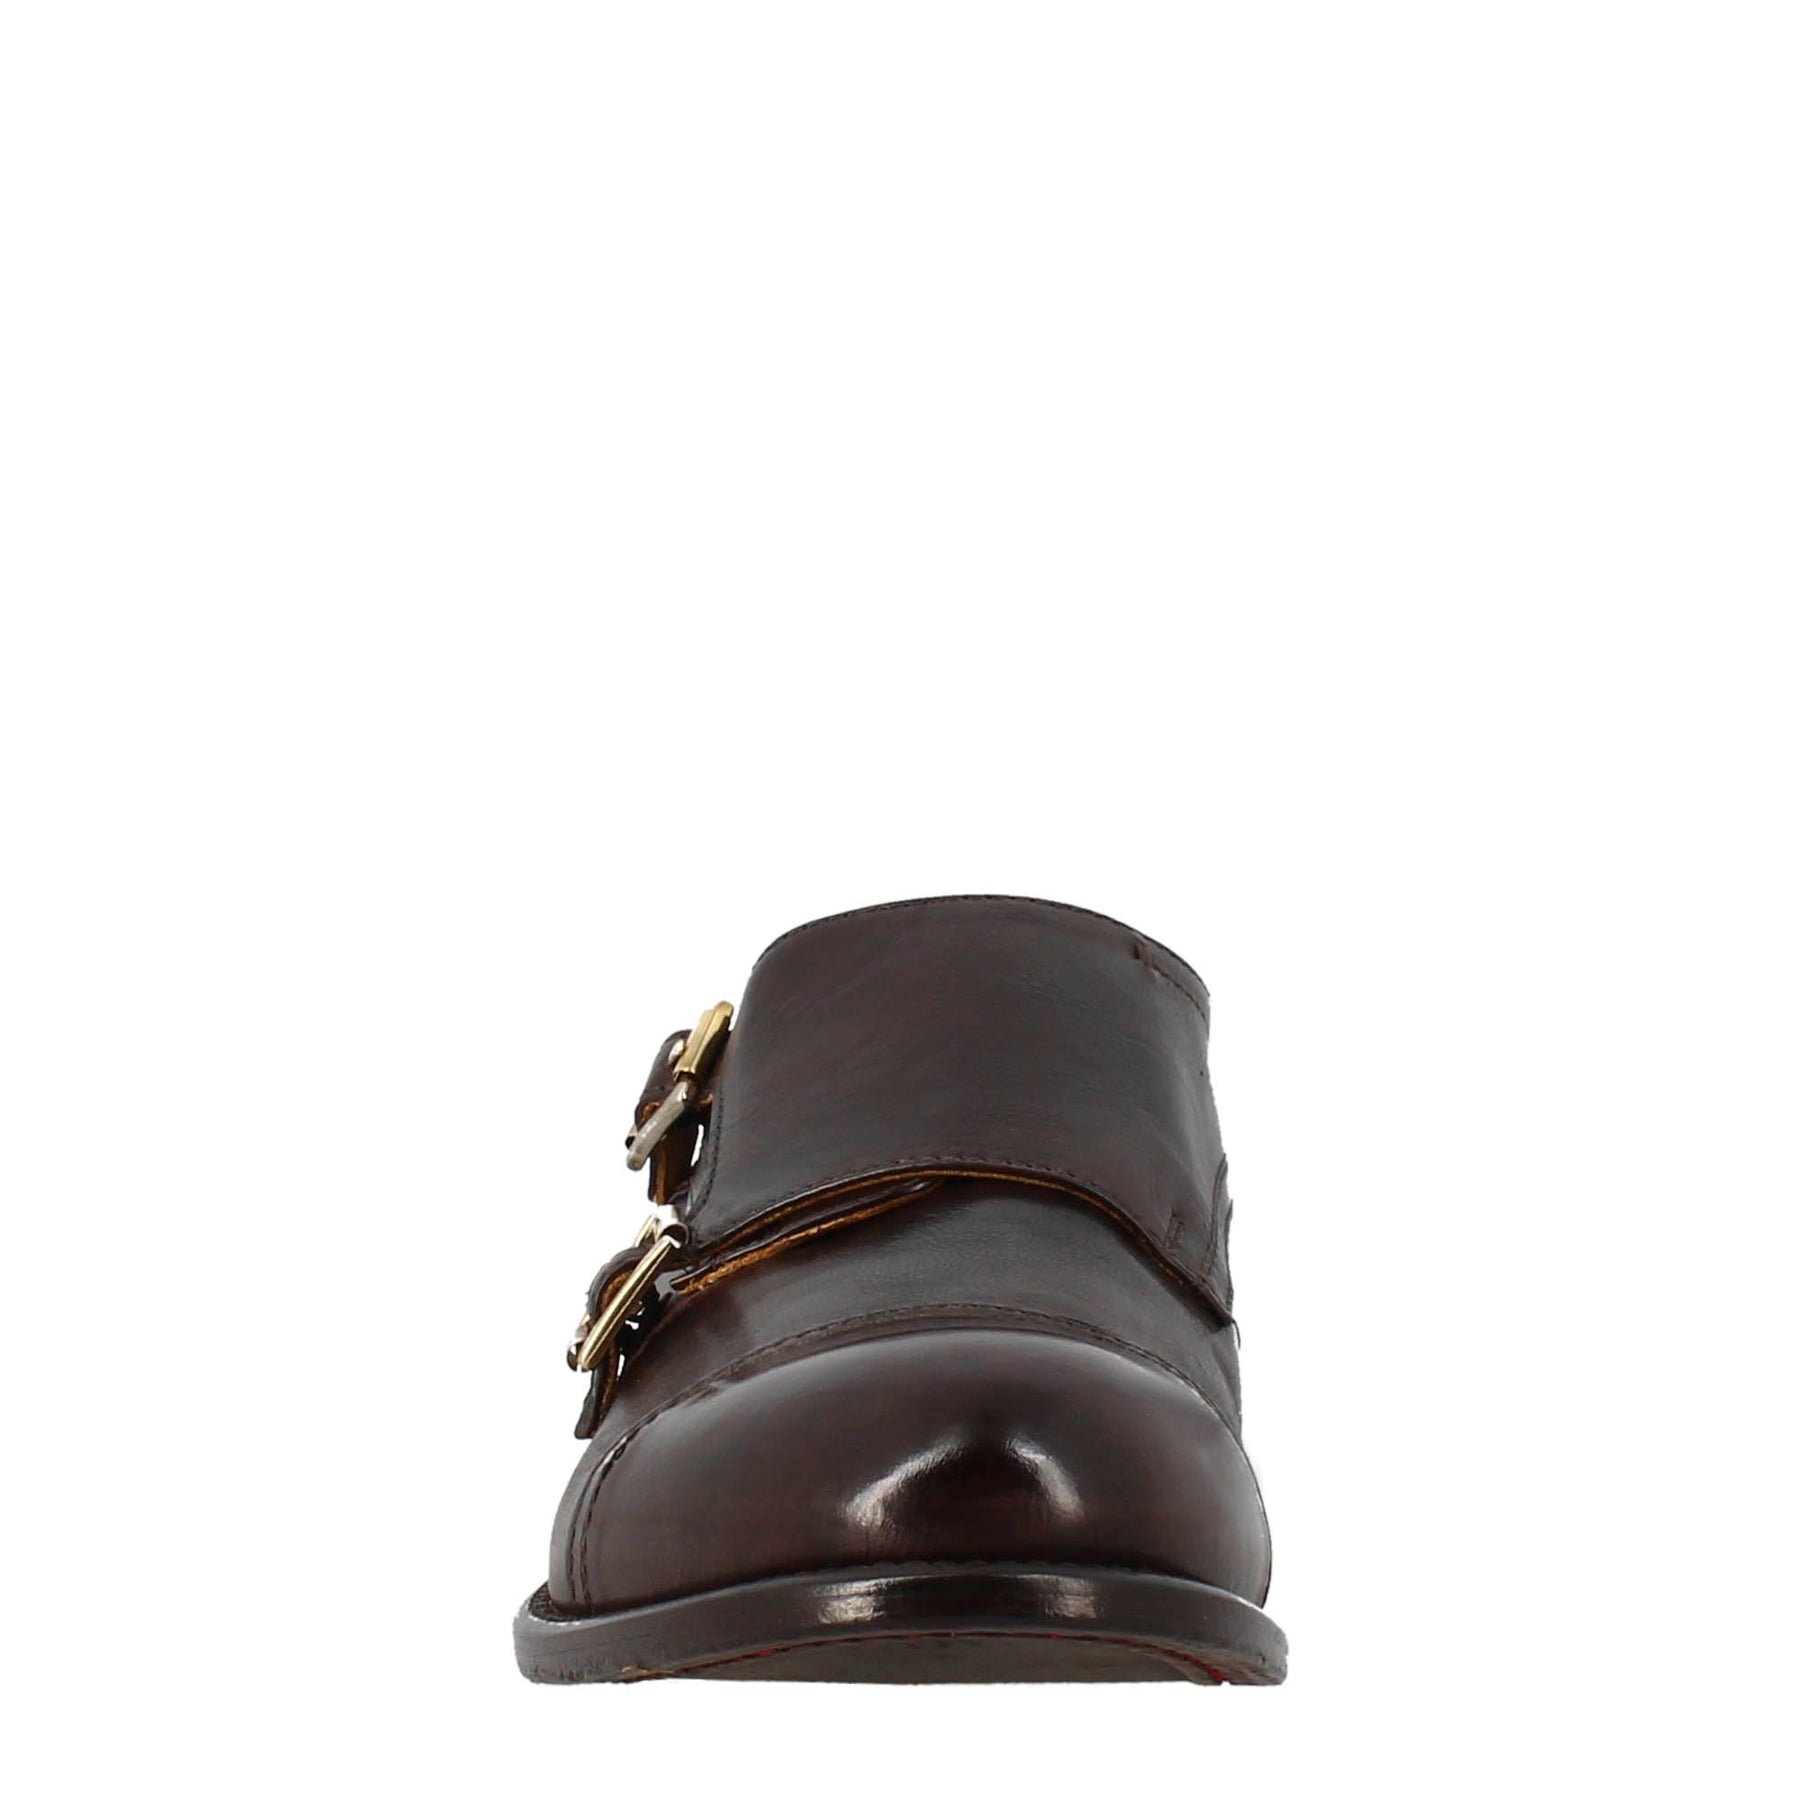 Men's elegant vintage bronze double buckle shoe in leather